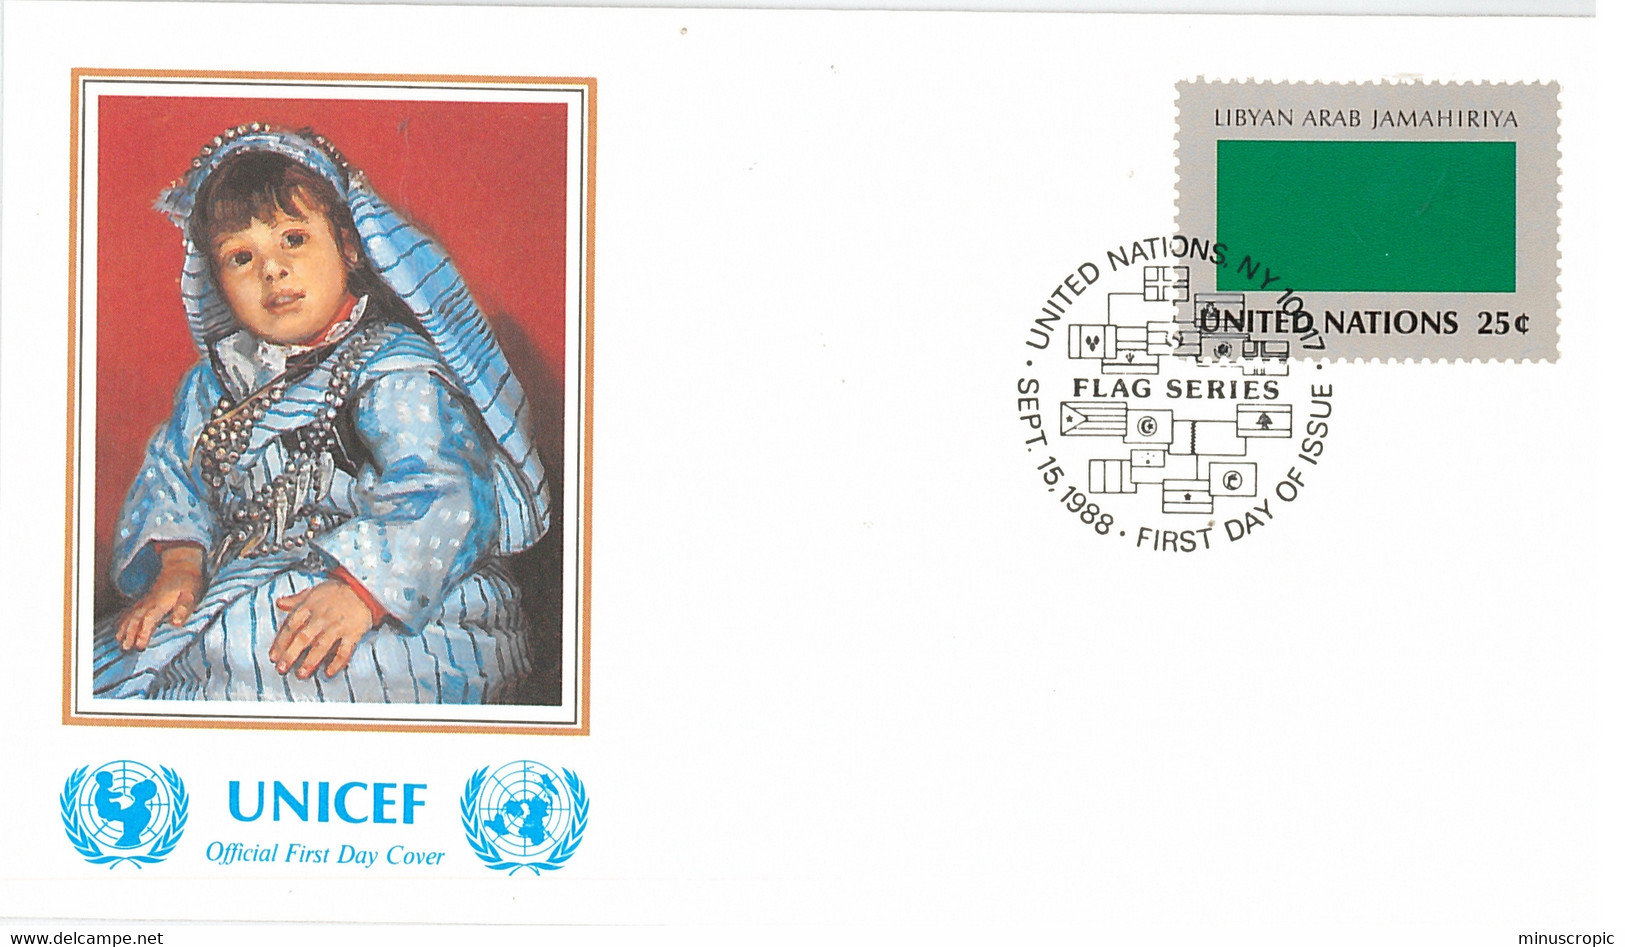 Enveloppe FDC United Nations - UNICEF - Flag Series 8/88 - Libyan Arab Jamahiriya - 1988 - Covers & Documents